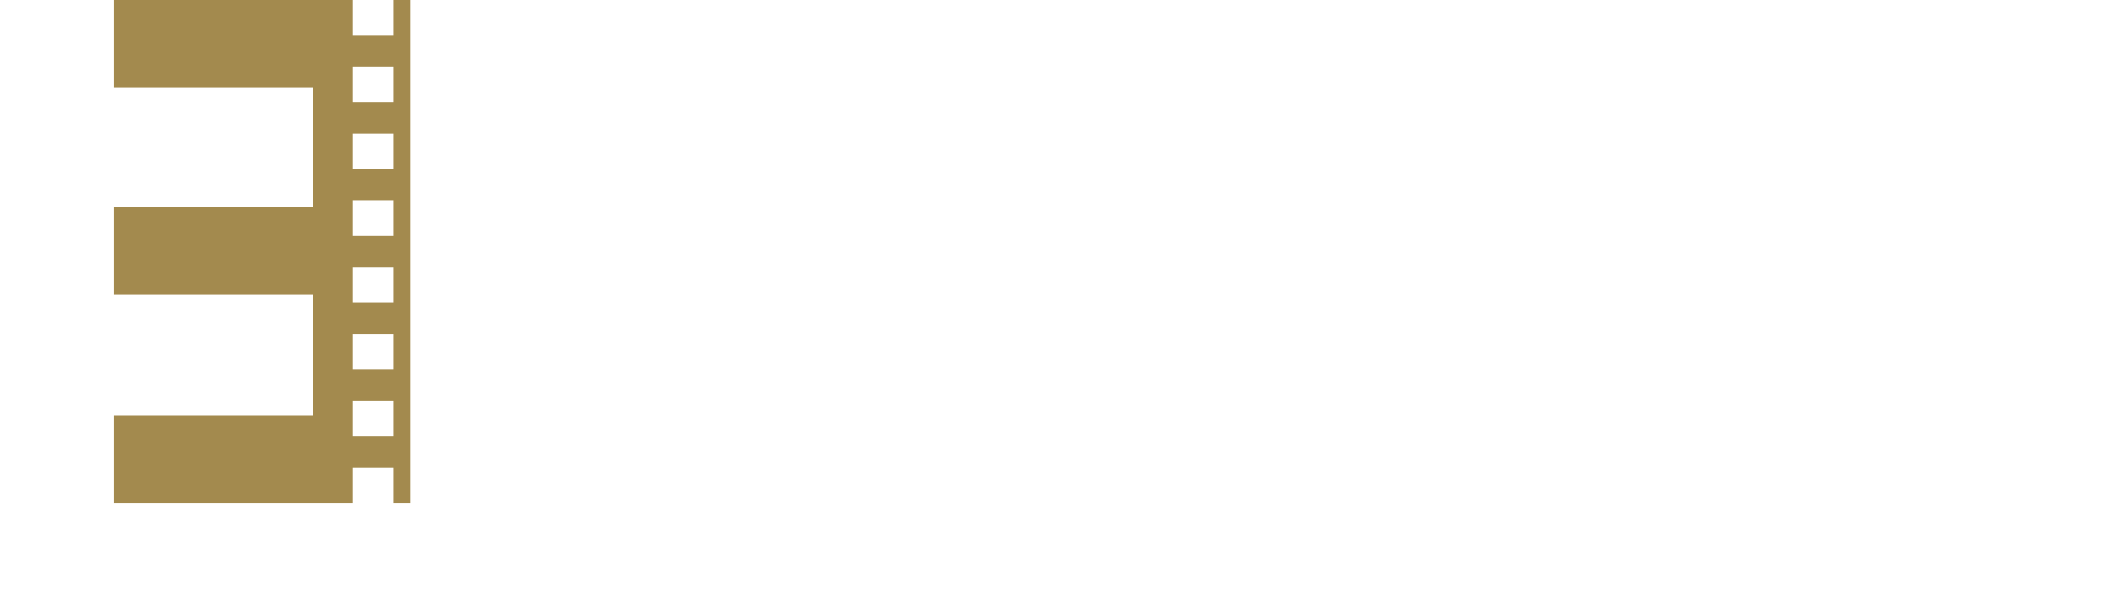 FascinAsian Film Festival